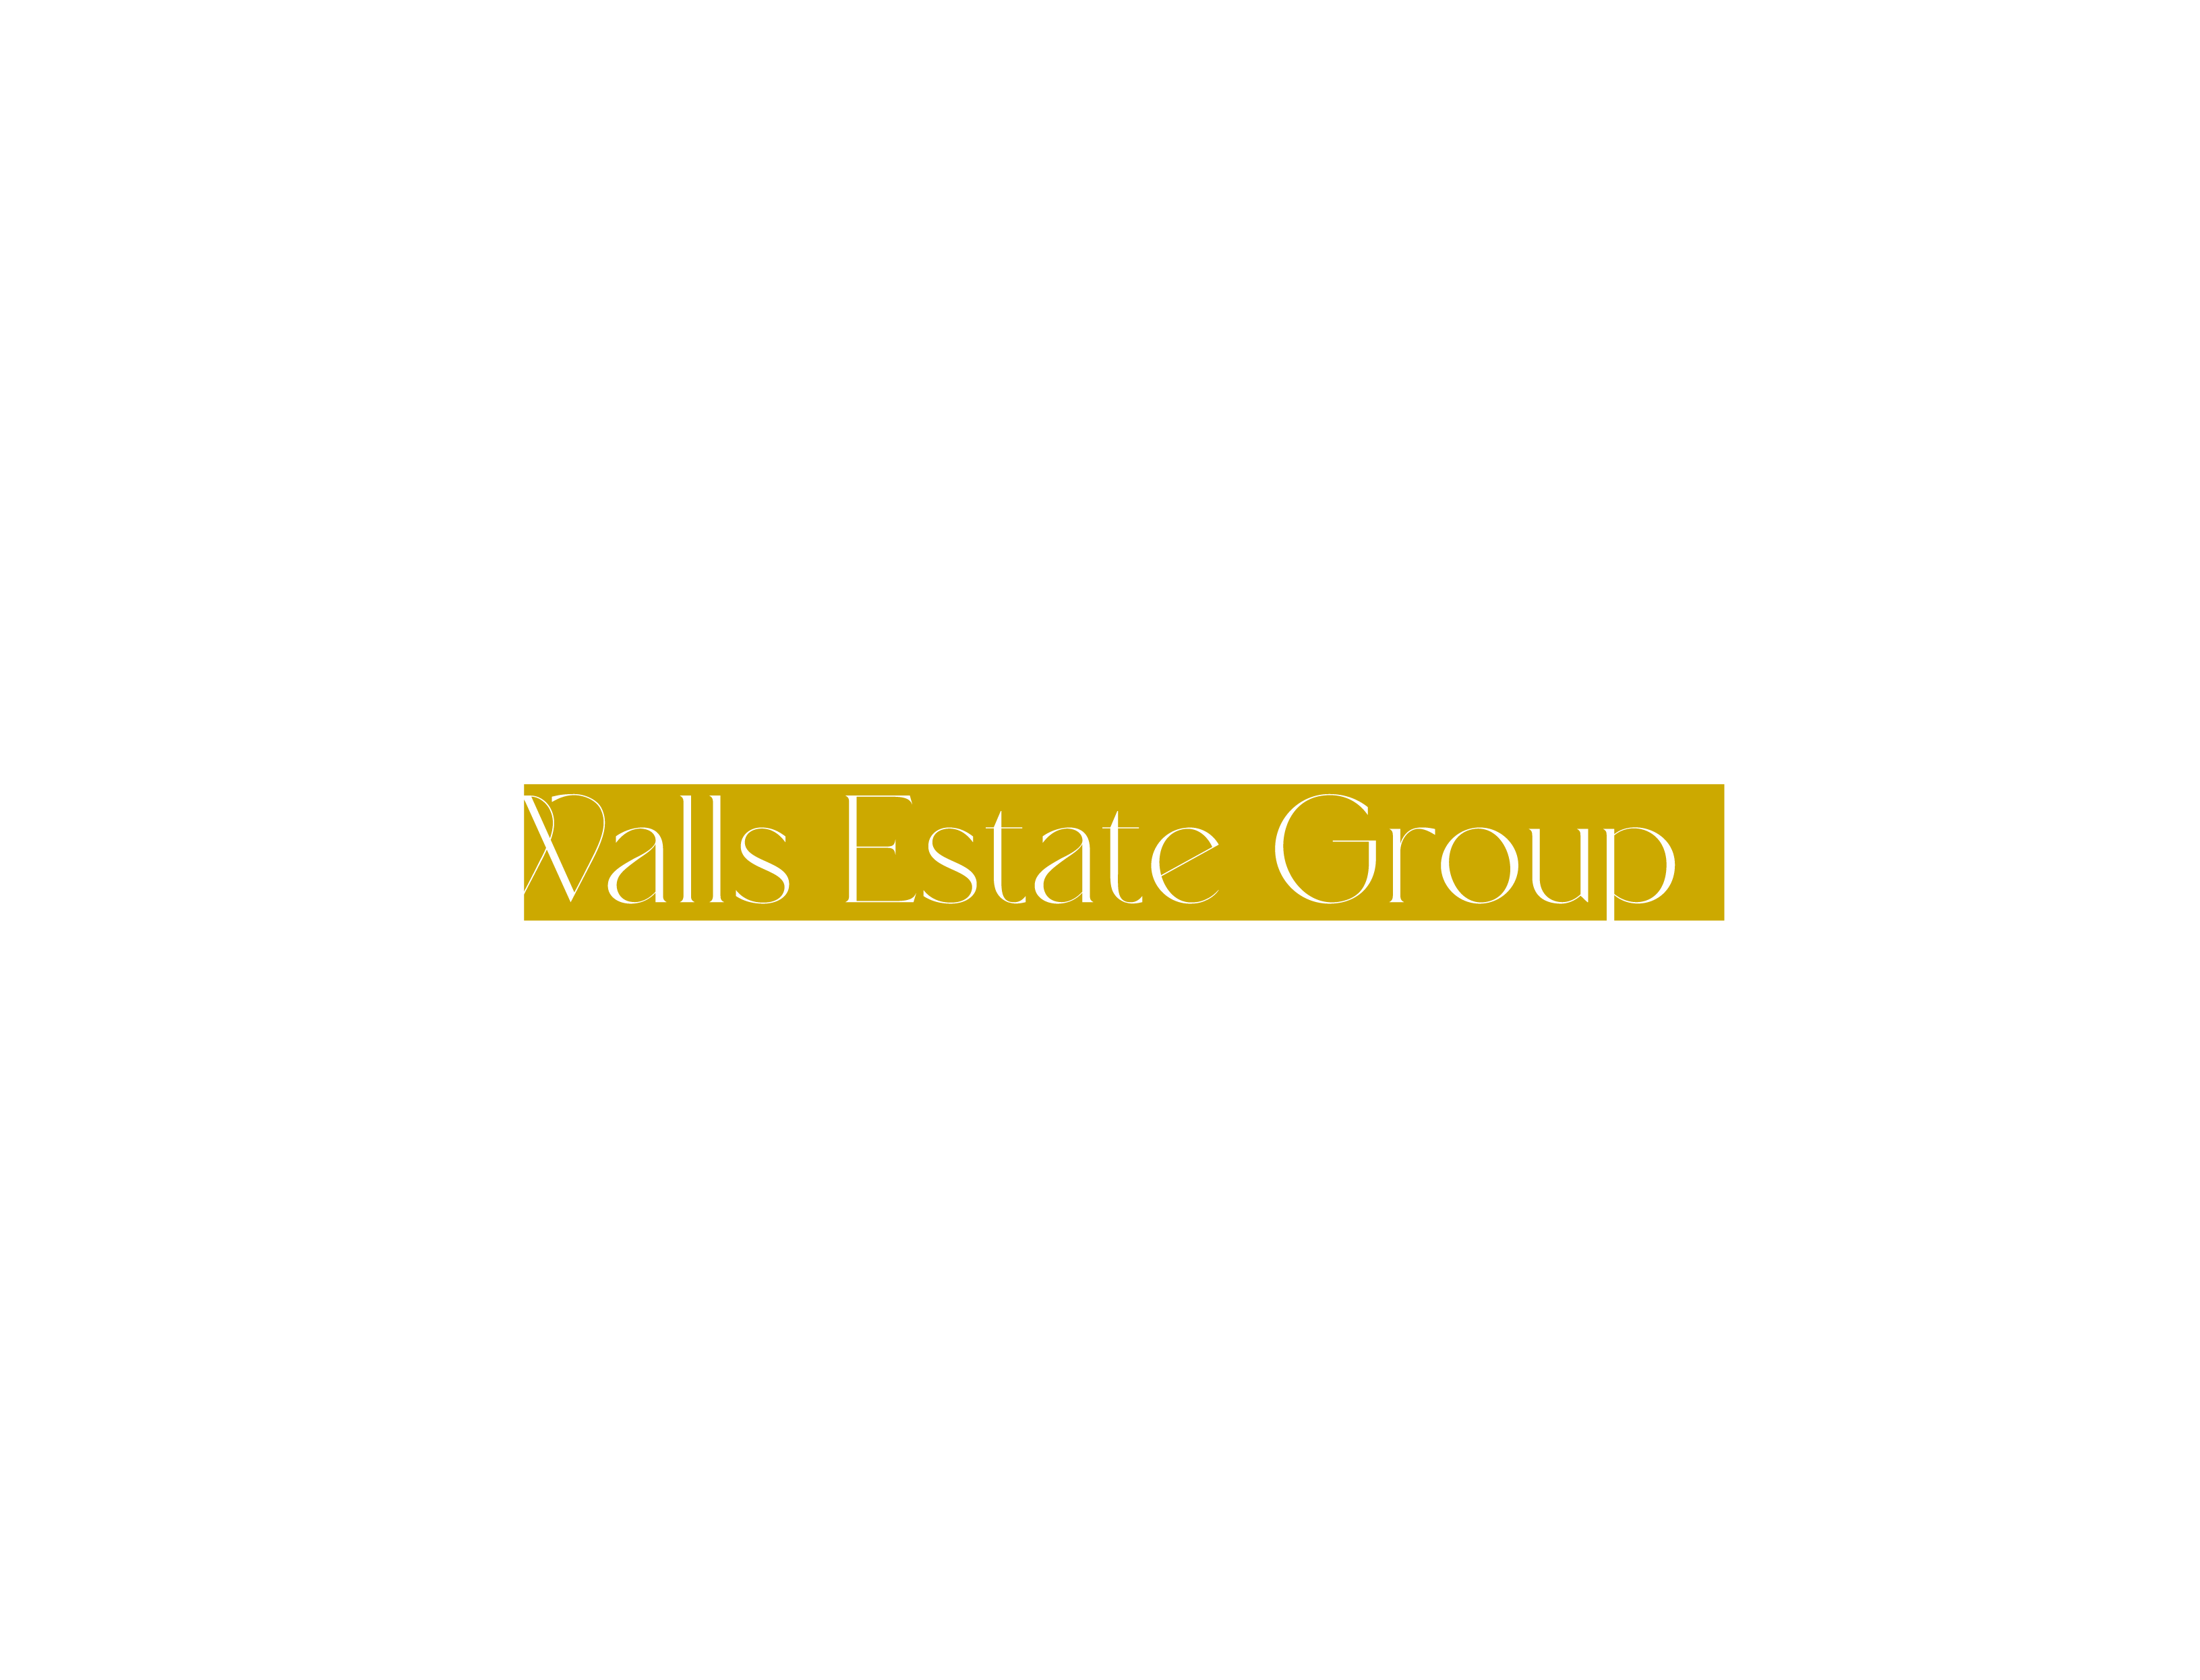 Walls Estate Group